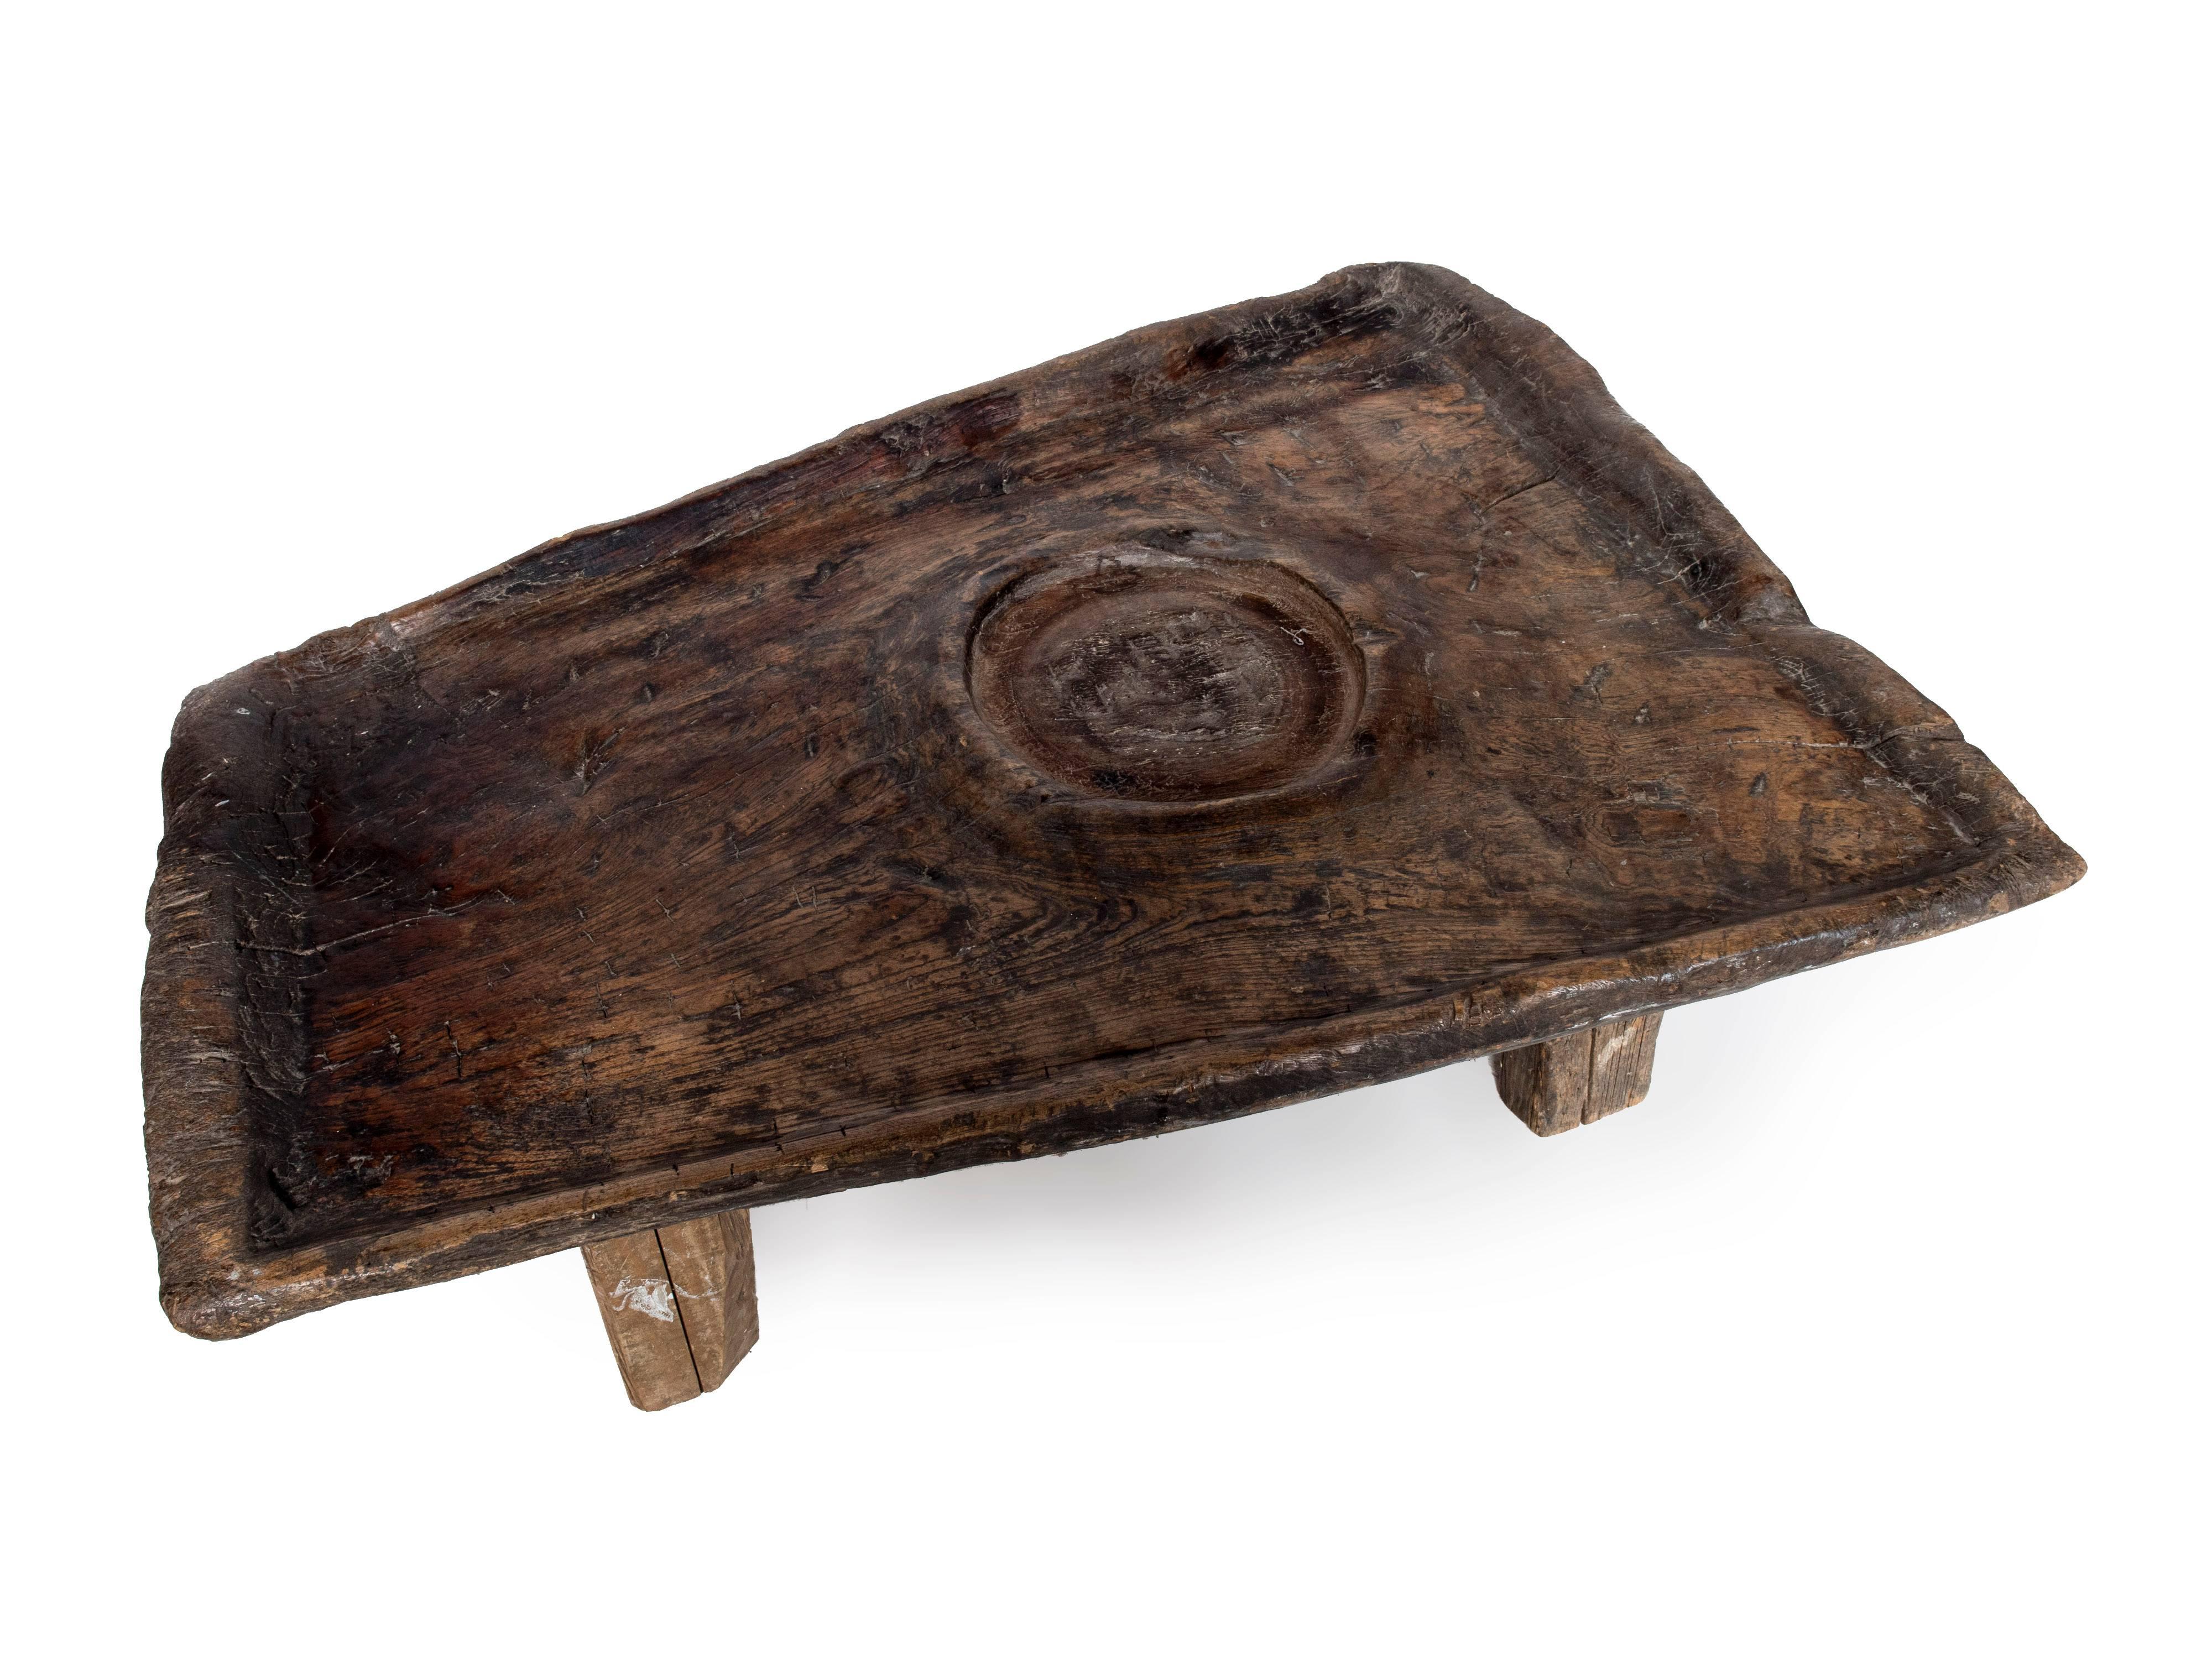 An Asian Acacia wooden coffee table.